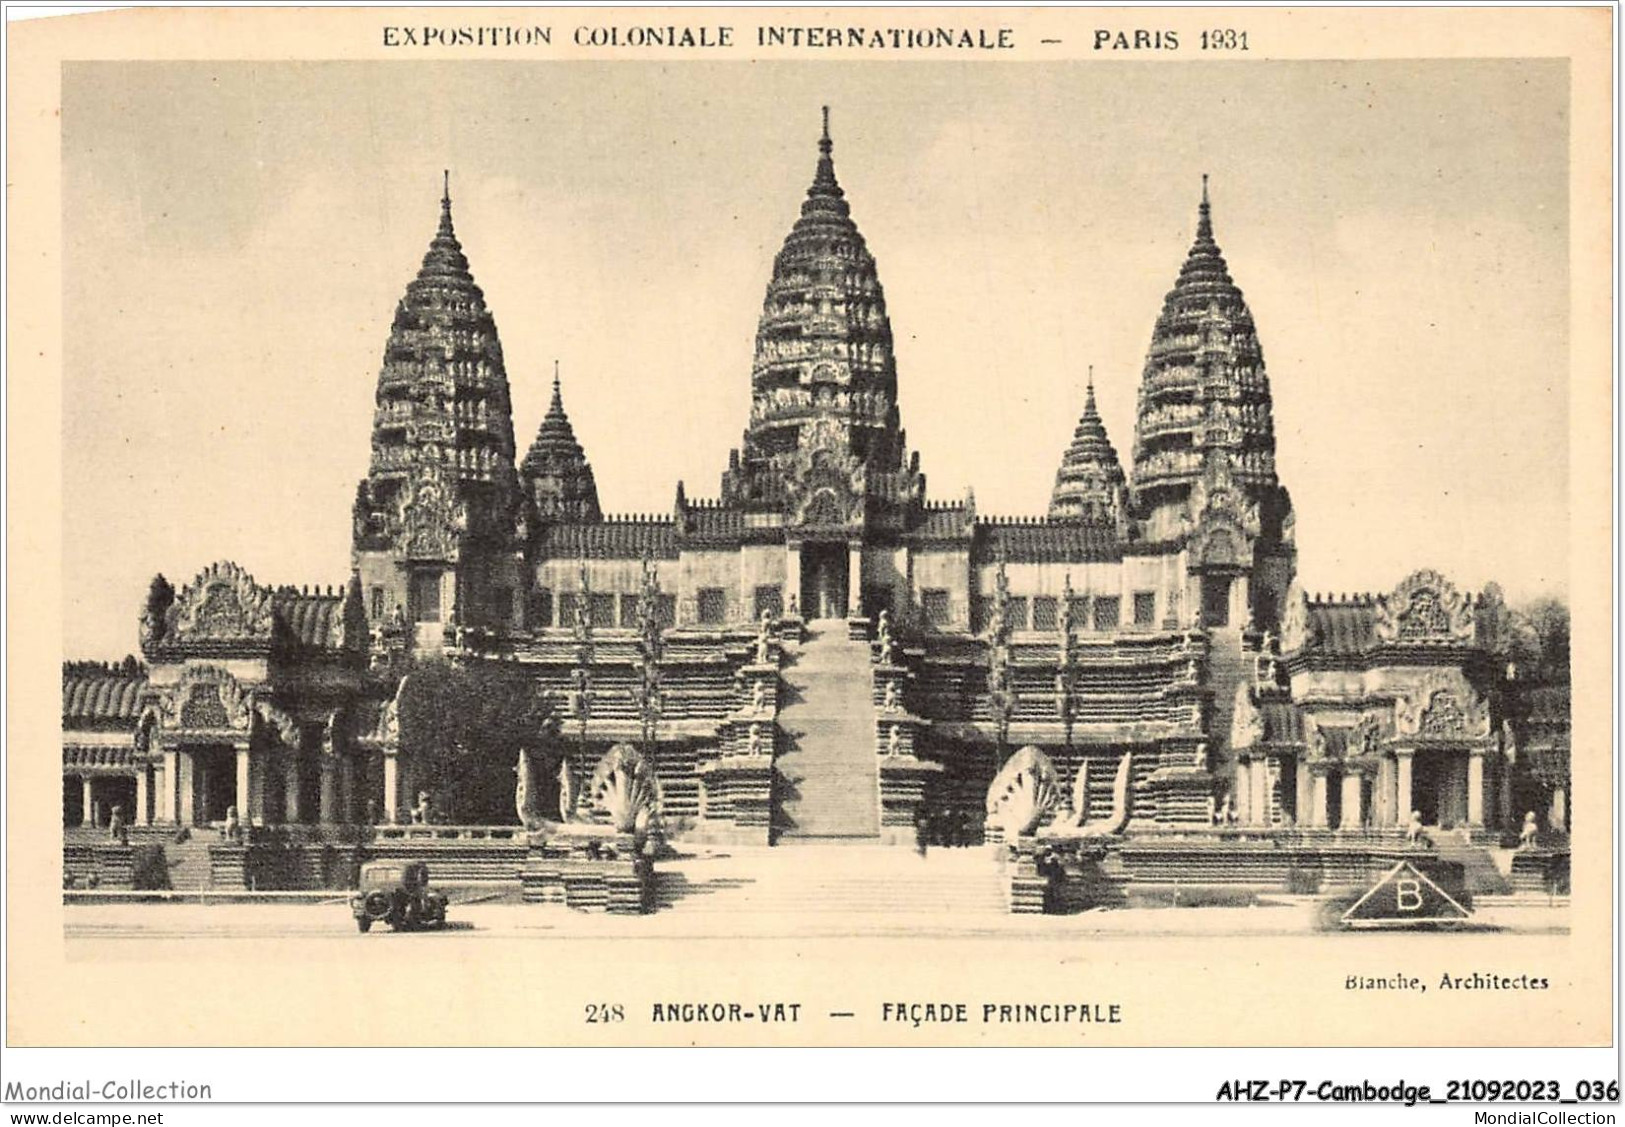 AHZP7-CAMBODGE-0614 - EXPOSITION COLONIALE INTERNATIONALE - PARIS 1931 - ANGKOR-VAT - FACADE PRINCIPALE - Cambodge